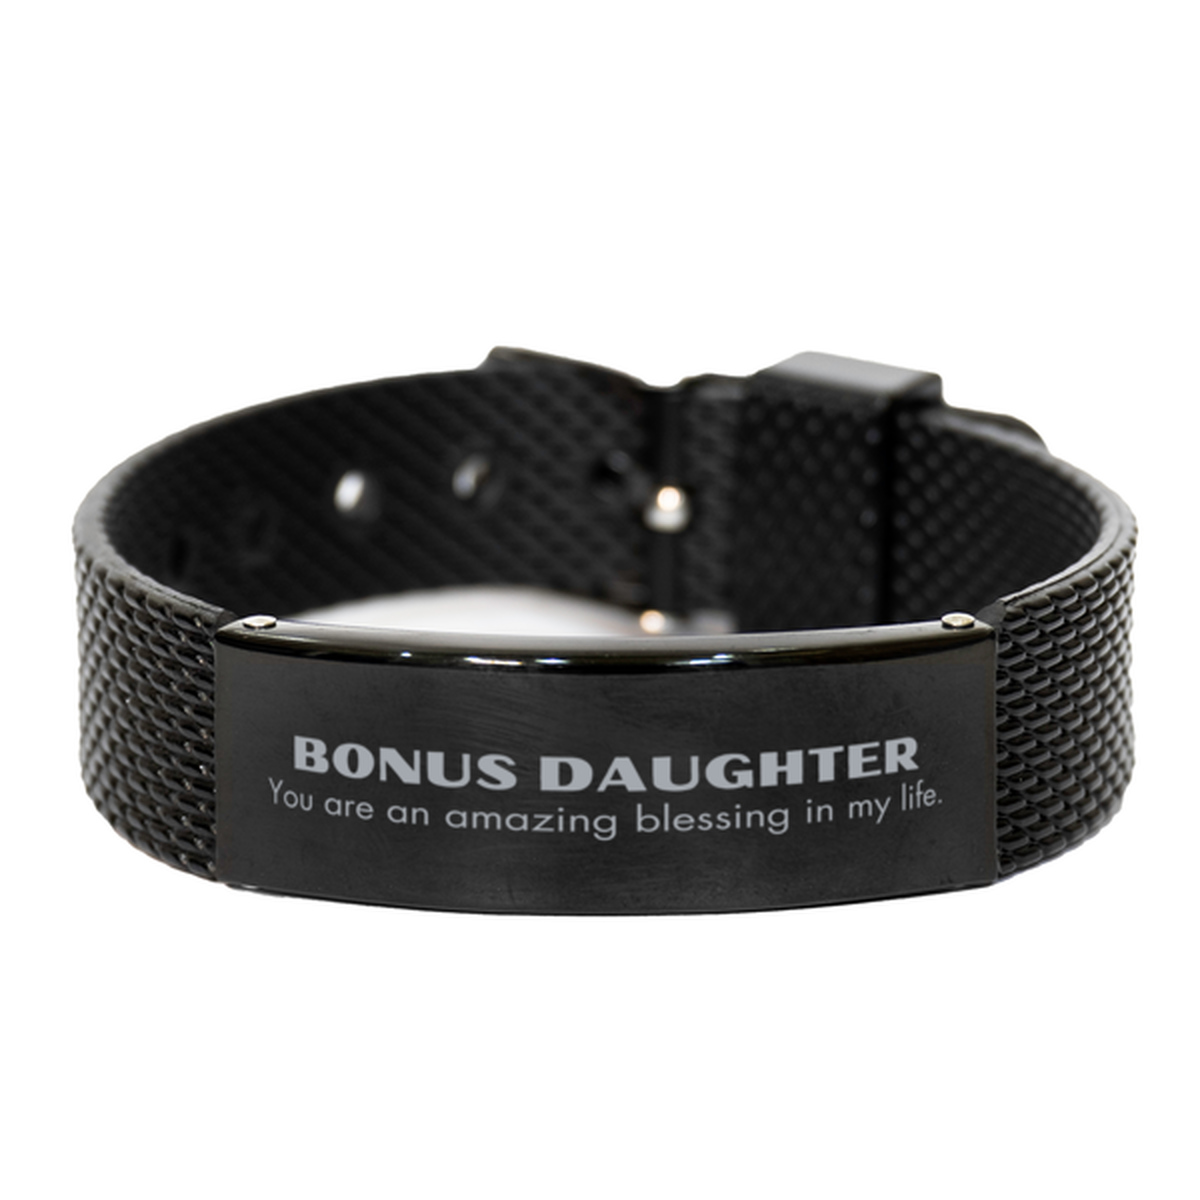 Bonus Daughter Black Shark Mesh Bracelet, You are an amazing blessing in my life, Thank You Gifts For Bonus Daughter, Inspirational Birthday Christmas Unique Gifts For Bonus Daughter